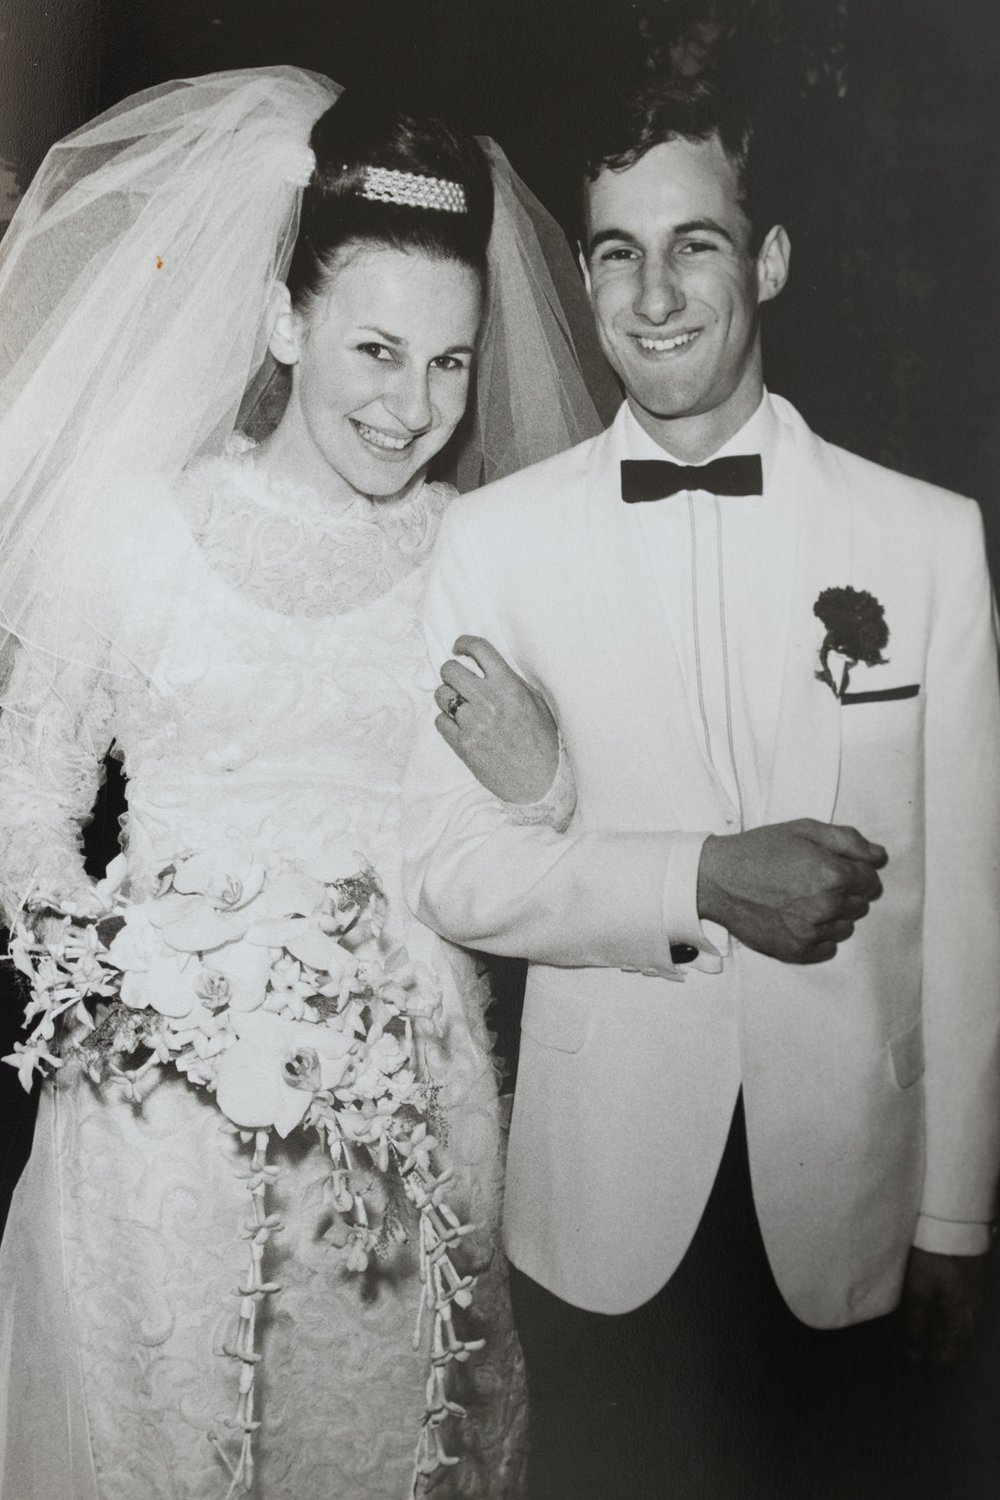 Barbara and Roger’s wedding reception, 9 Dec 1965